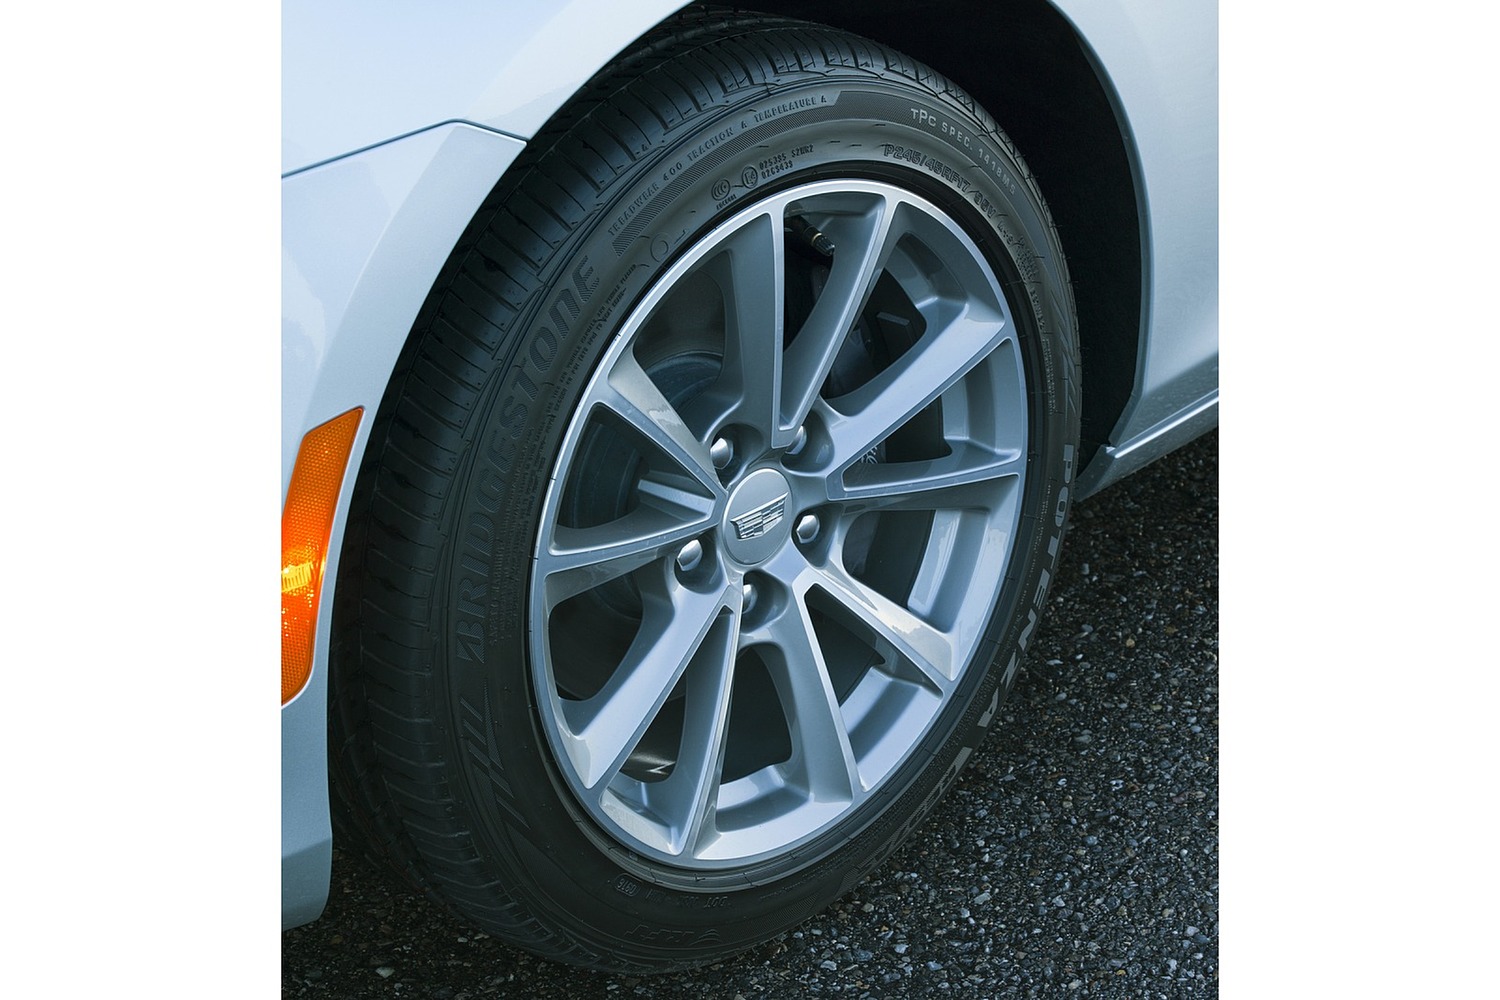 Cadillac CTS Luxury Sedan Wheel (2017 model year shown)